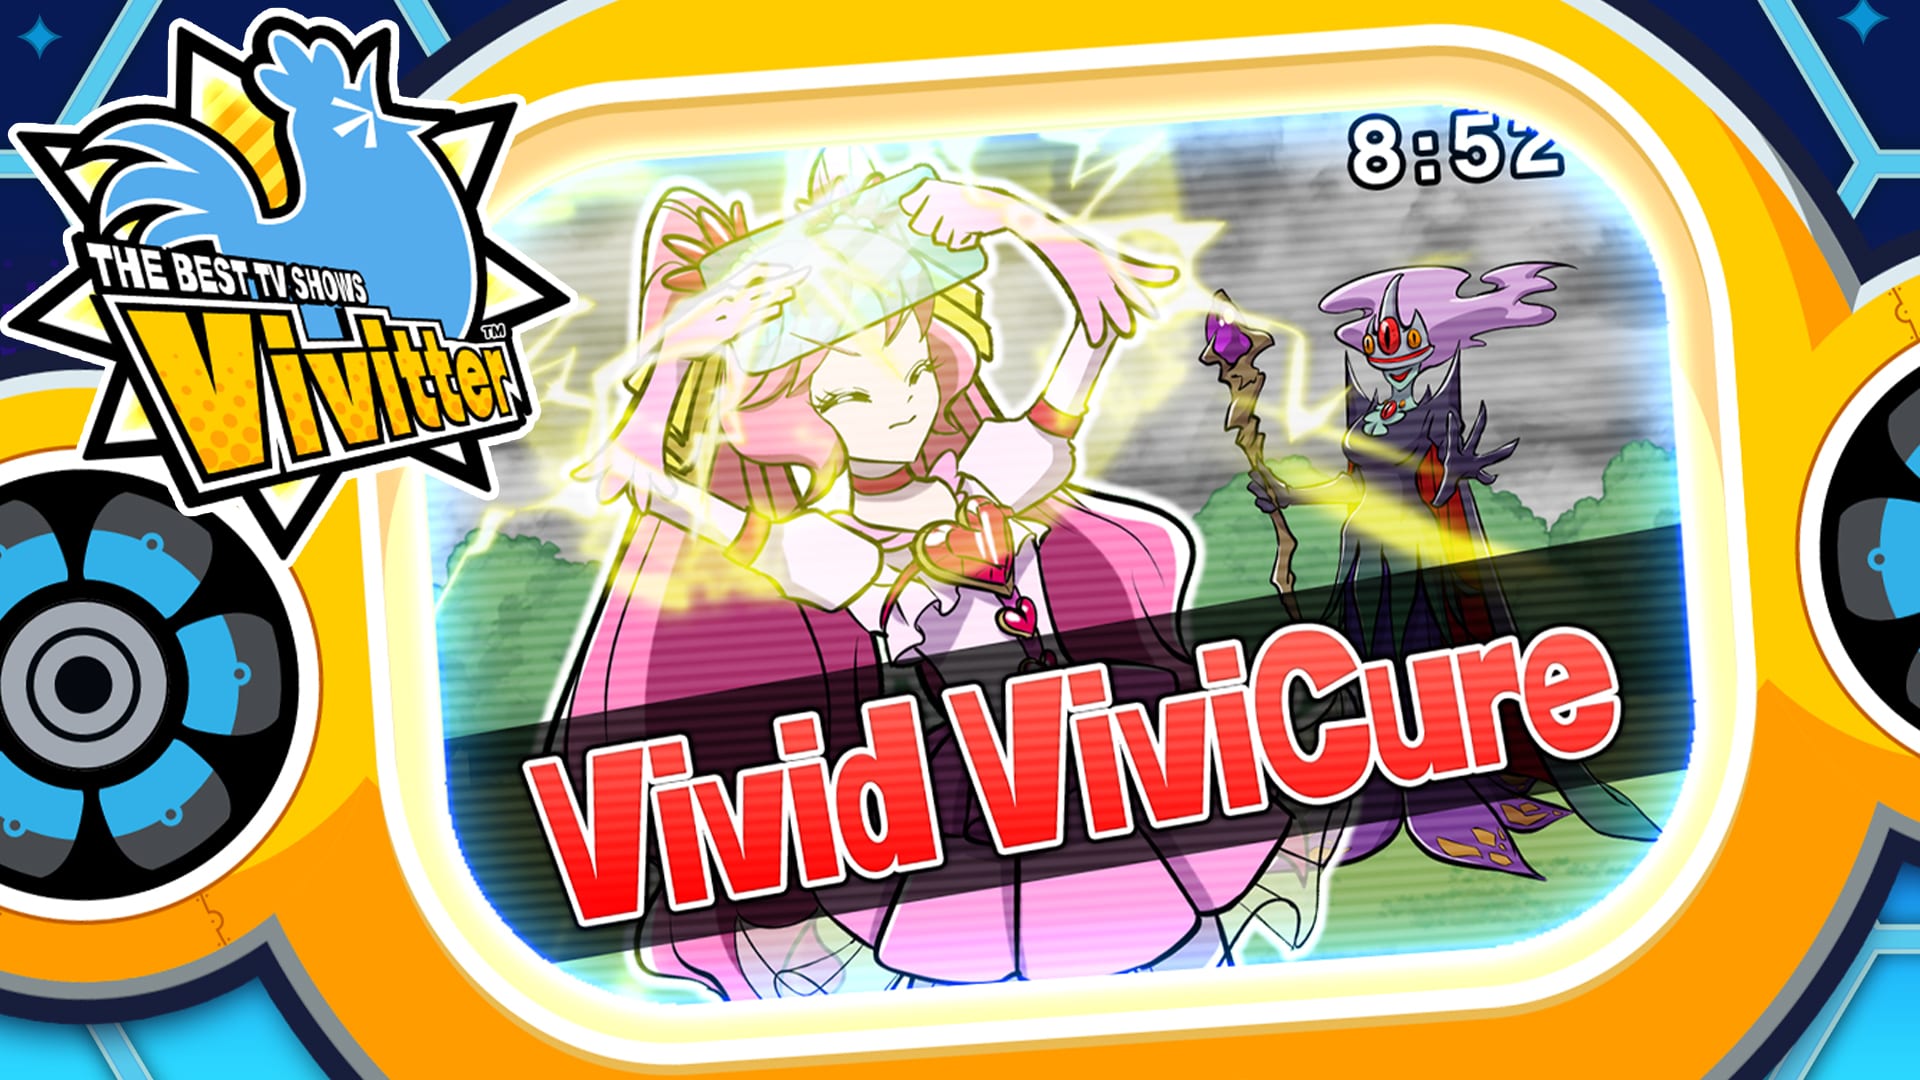 Additional mini-game "Vivid ViviCure"